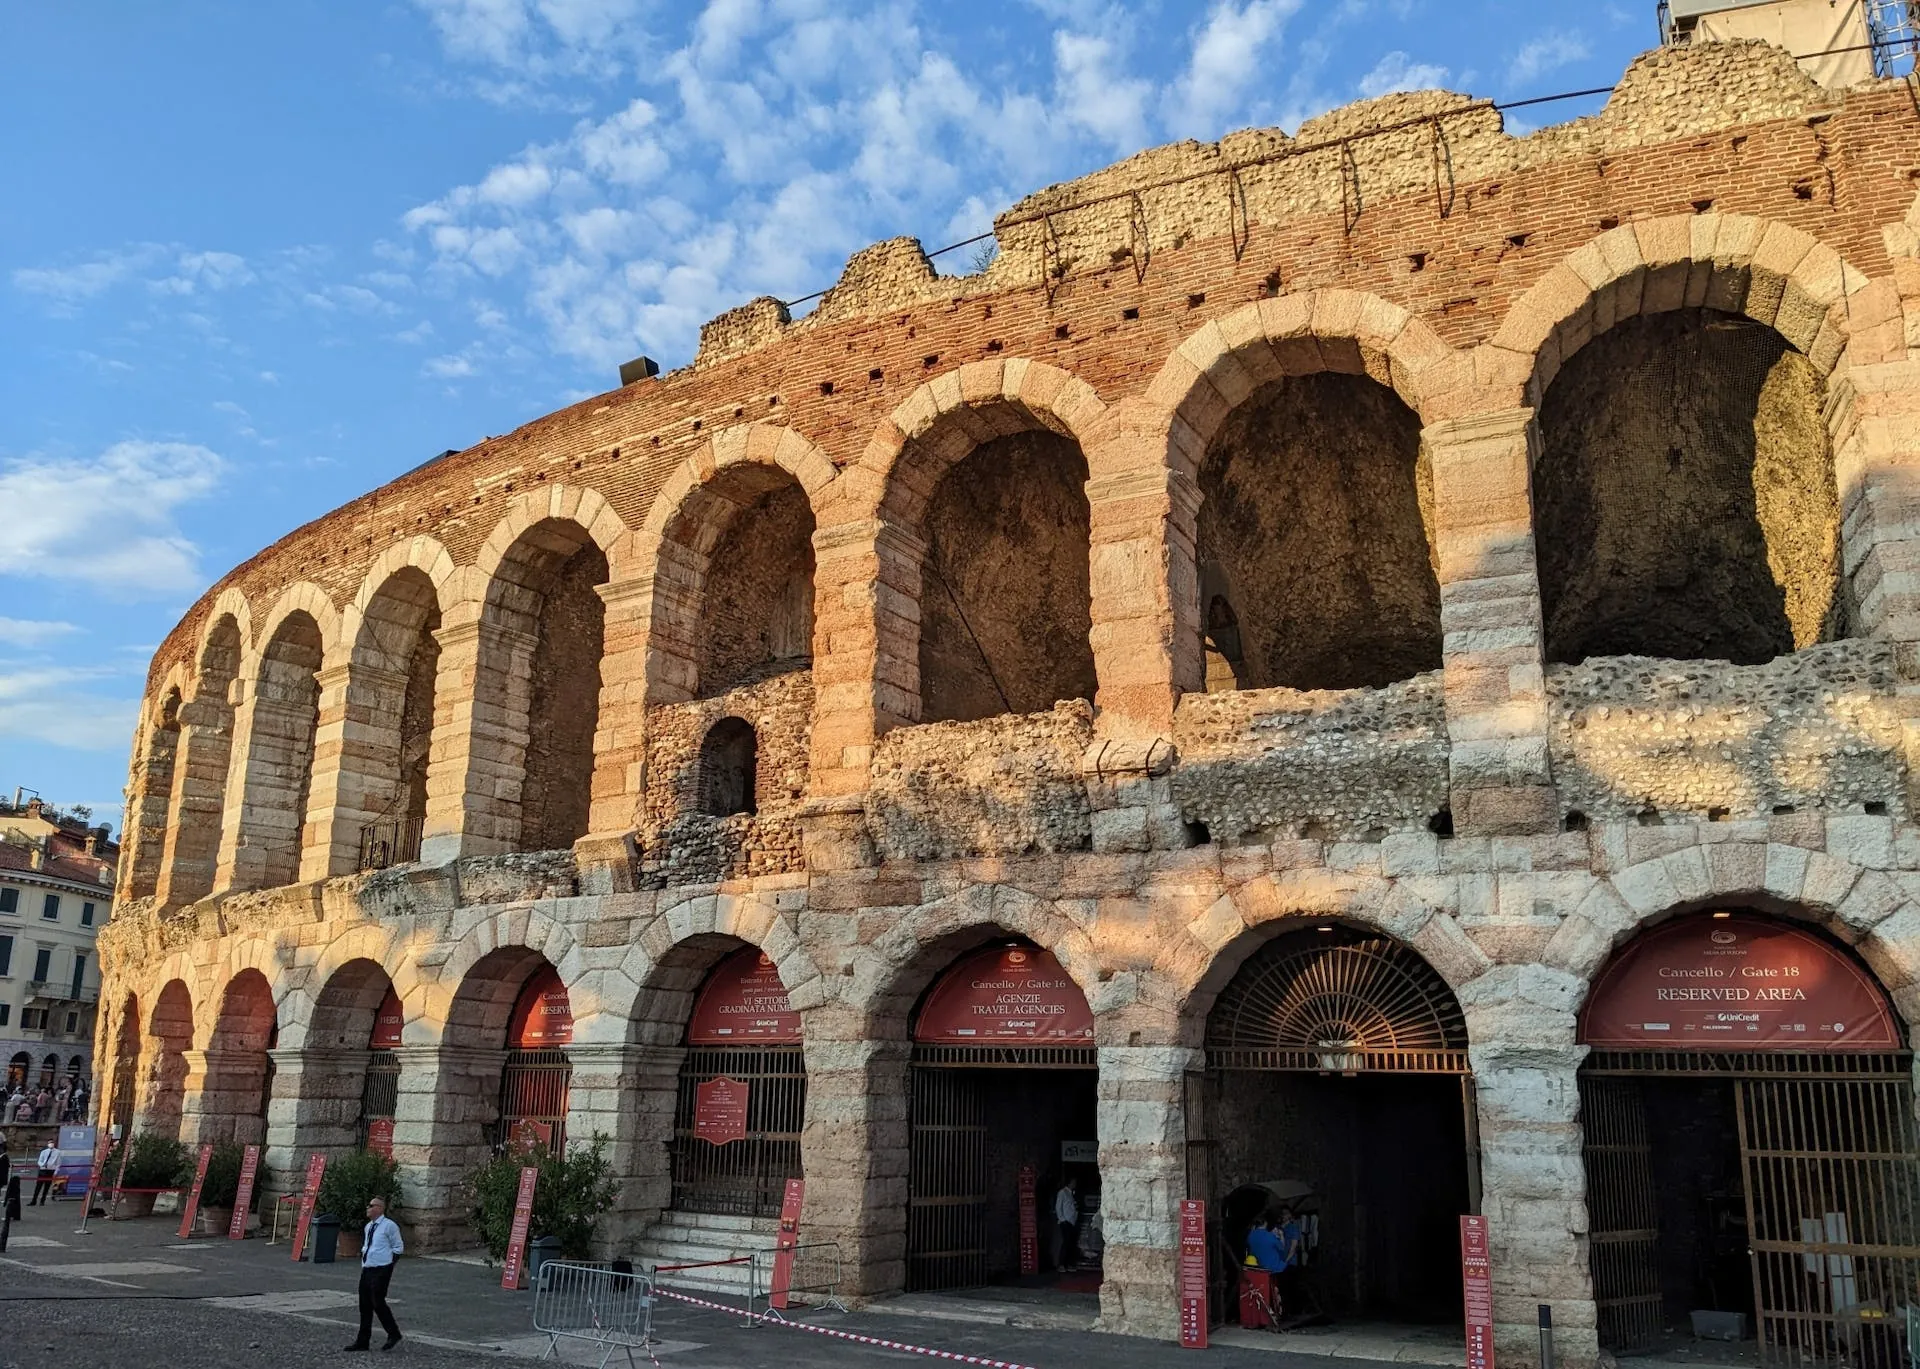 Eingang zur Arena di Verona (Opernfestspiele)